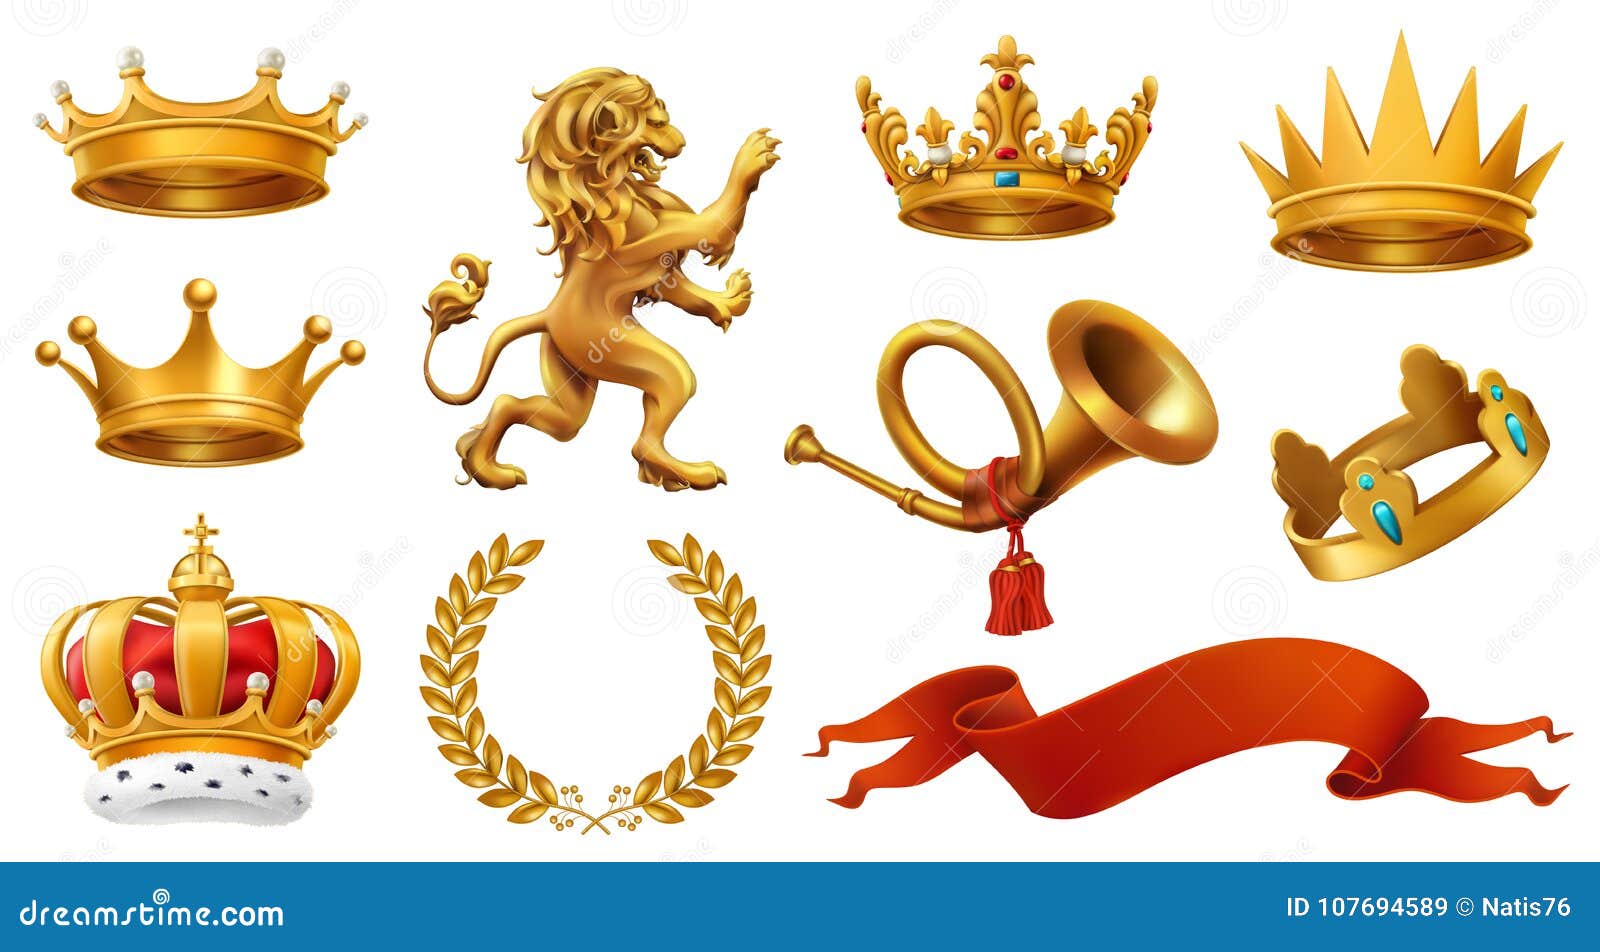 gold crown of the king. laurel wreath, trumpet, lion, ribbon.  icon set